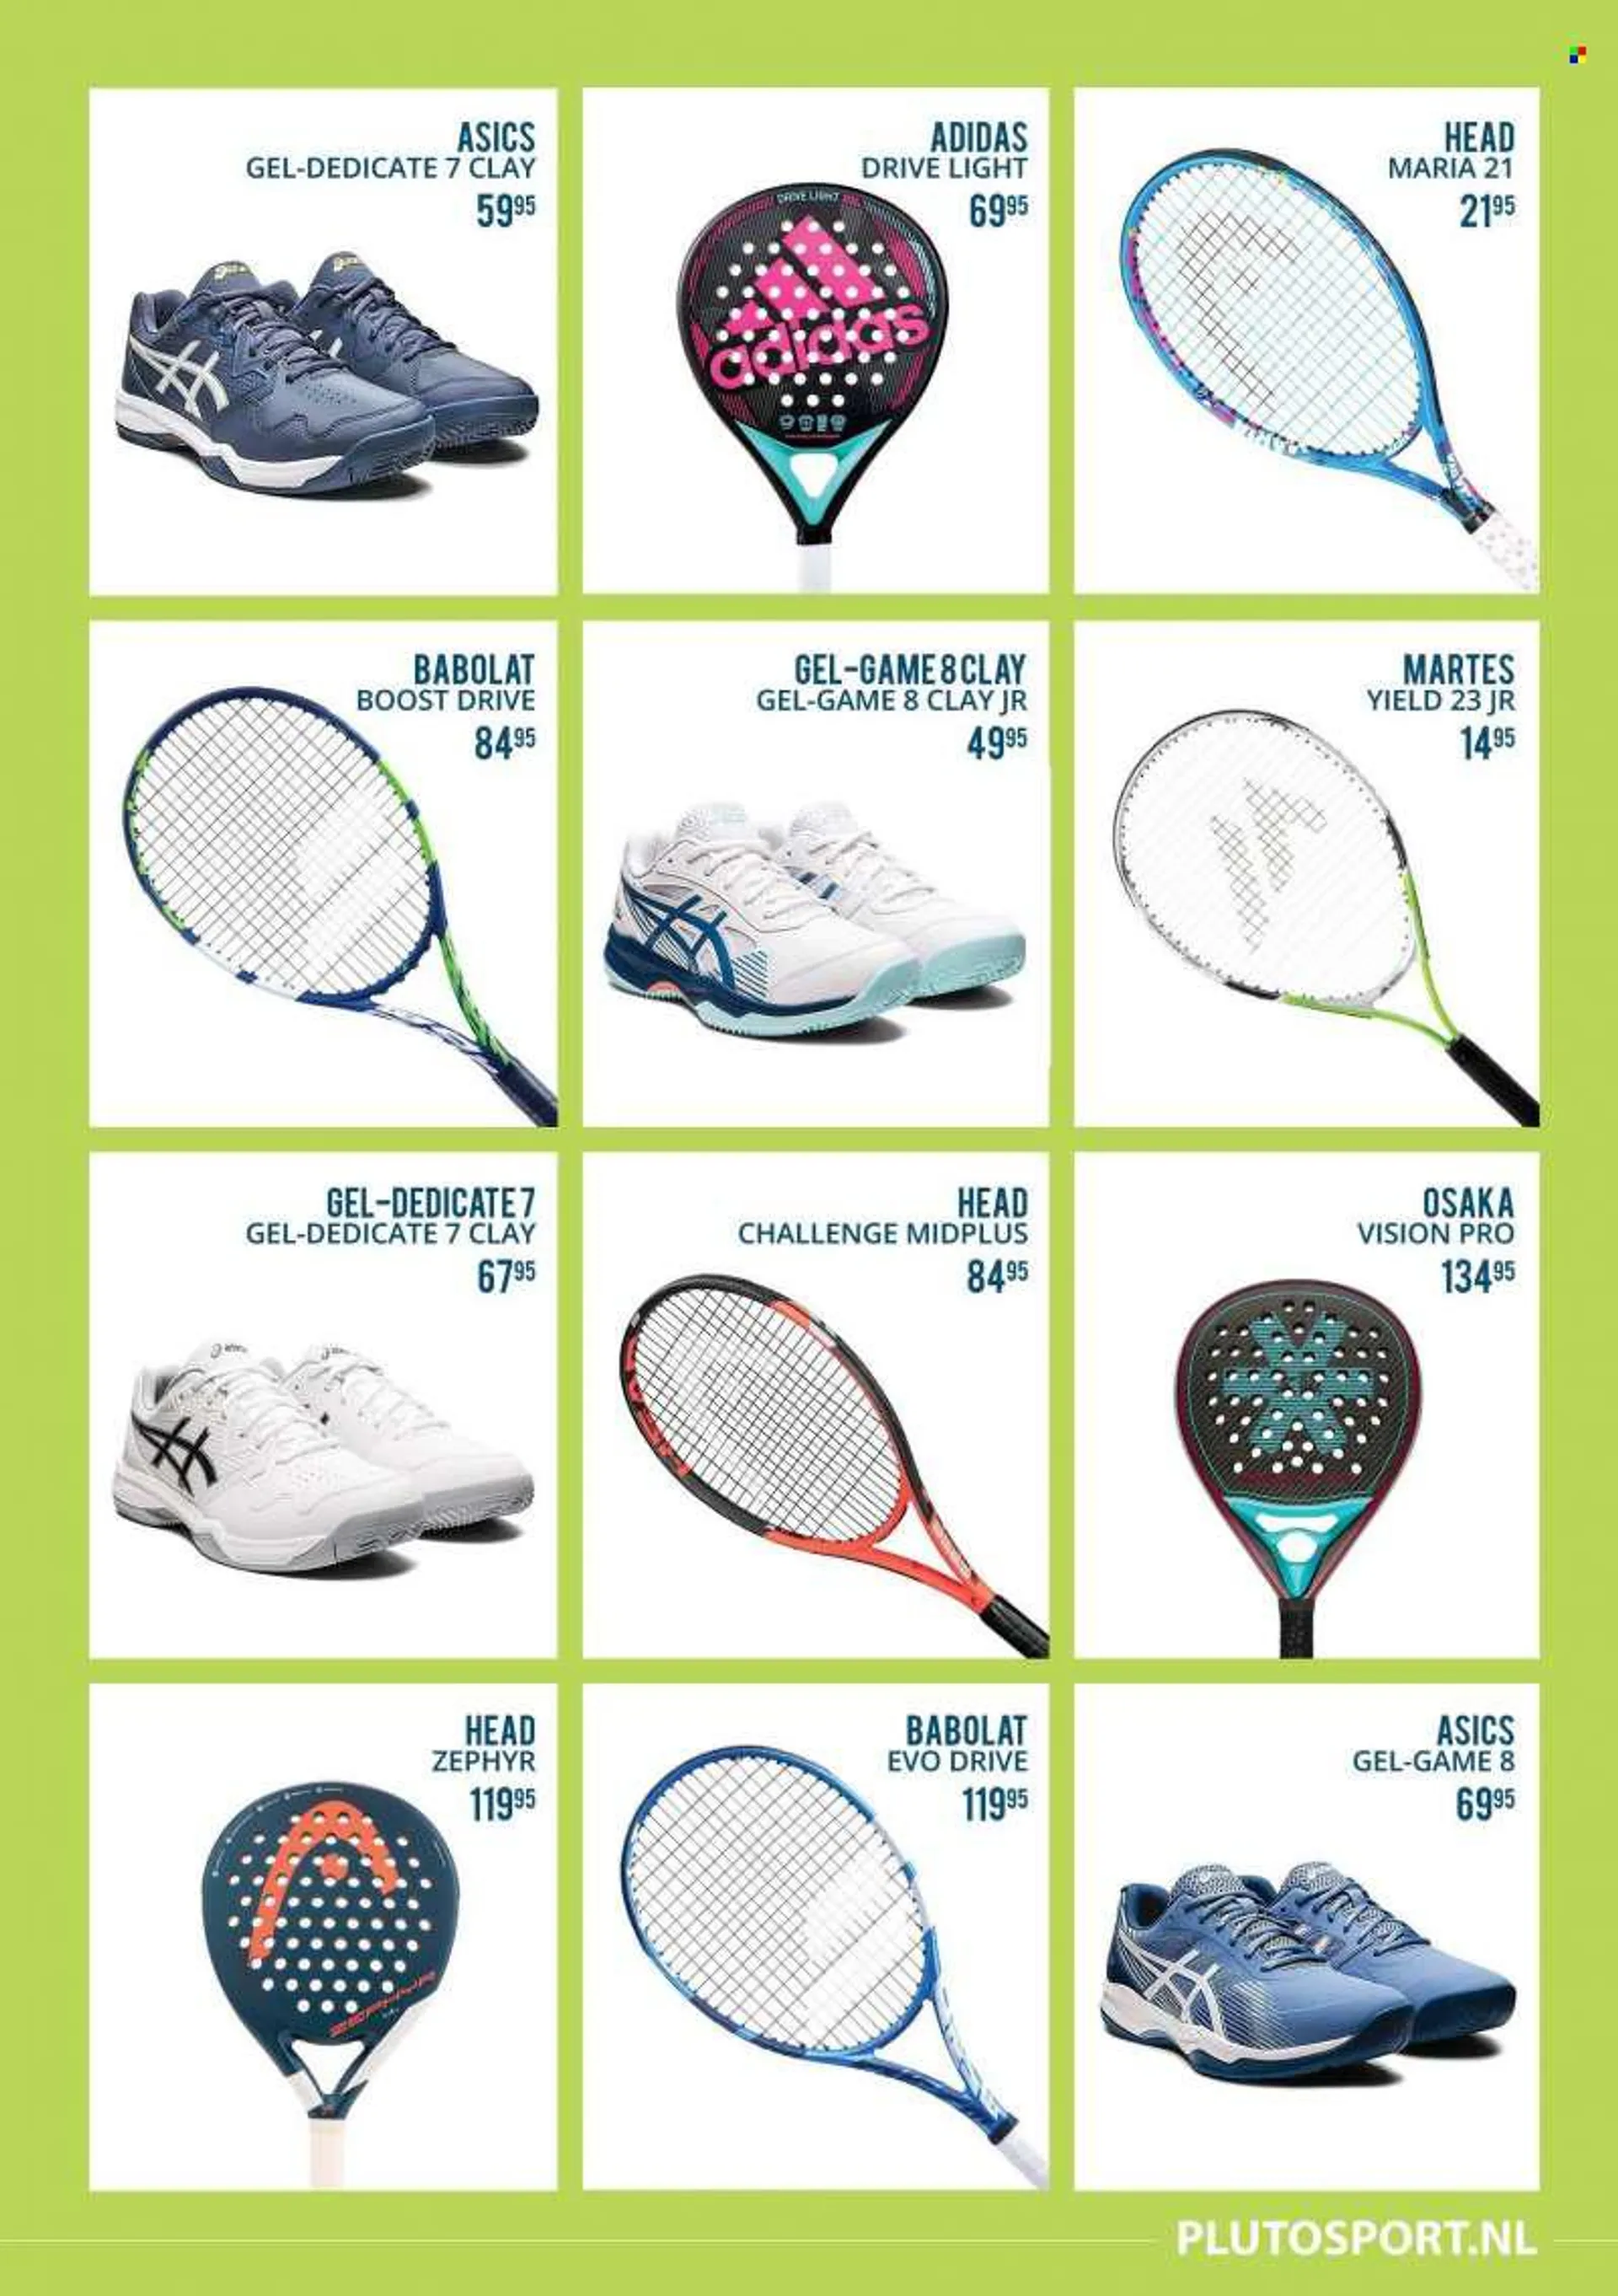 Plutosport-aanbieding -  producten in de aanbieding - Adidas, Asics, HEAD. Pagina 19.